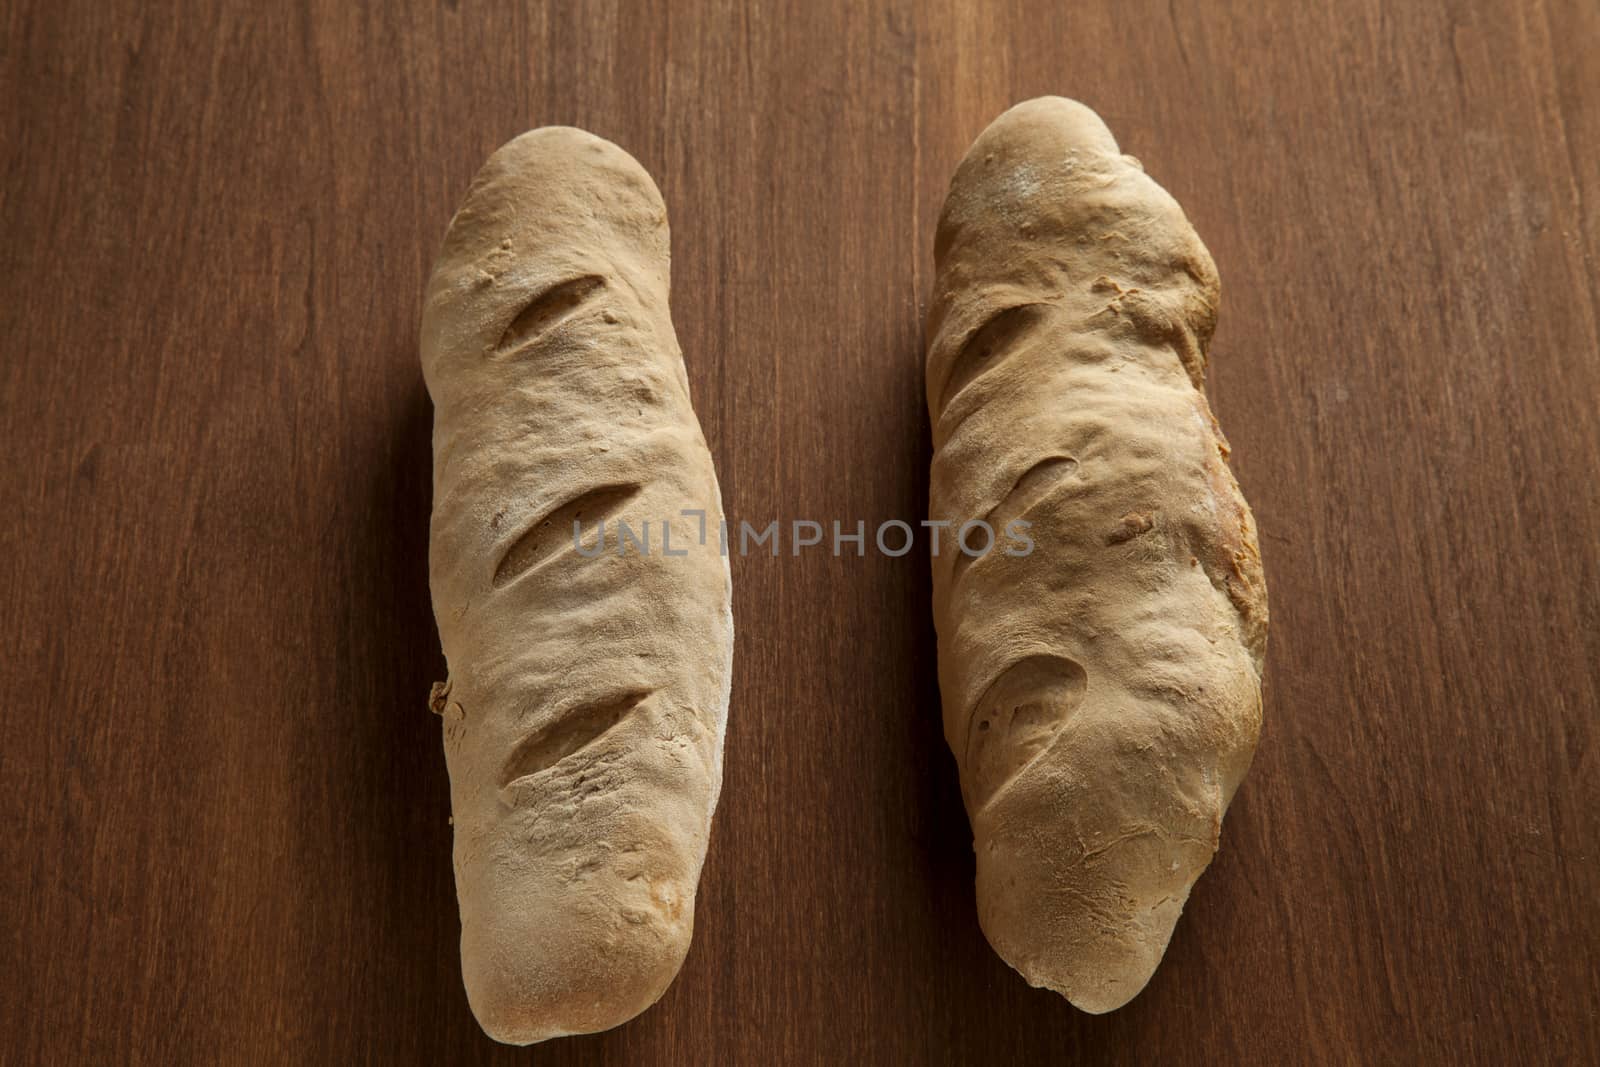 baked bread loaf on wood